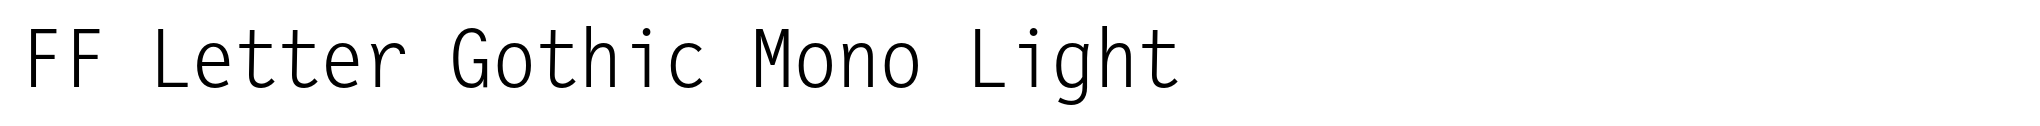 FF Letter Gothic Mono Light image